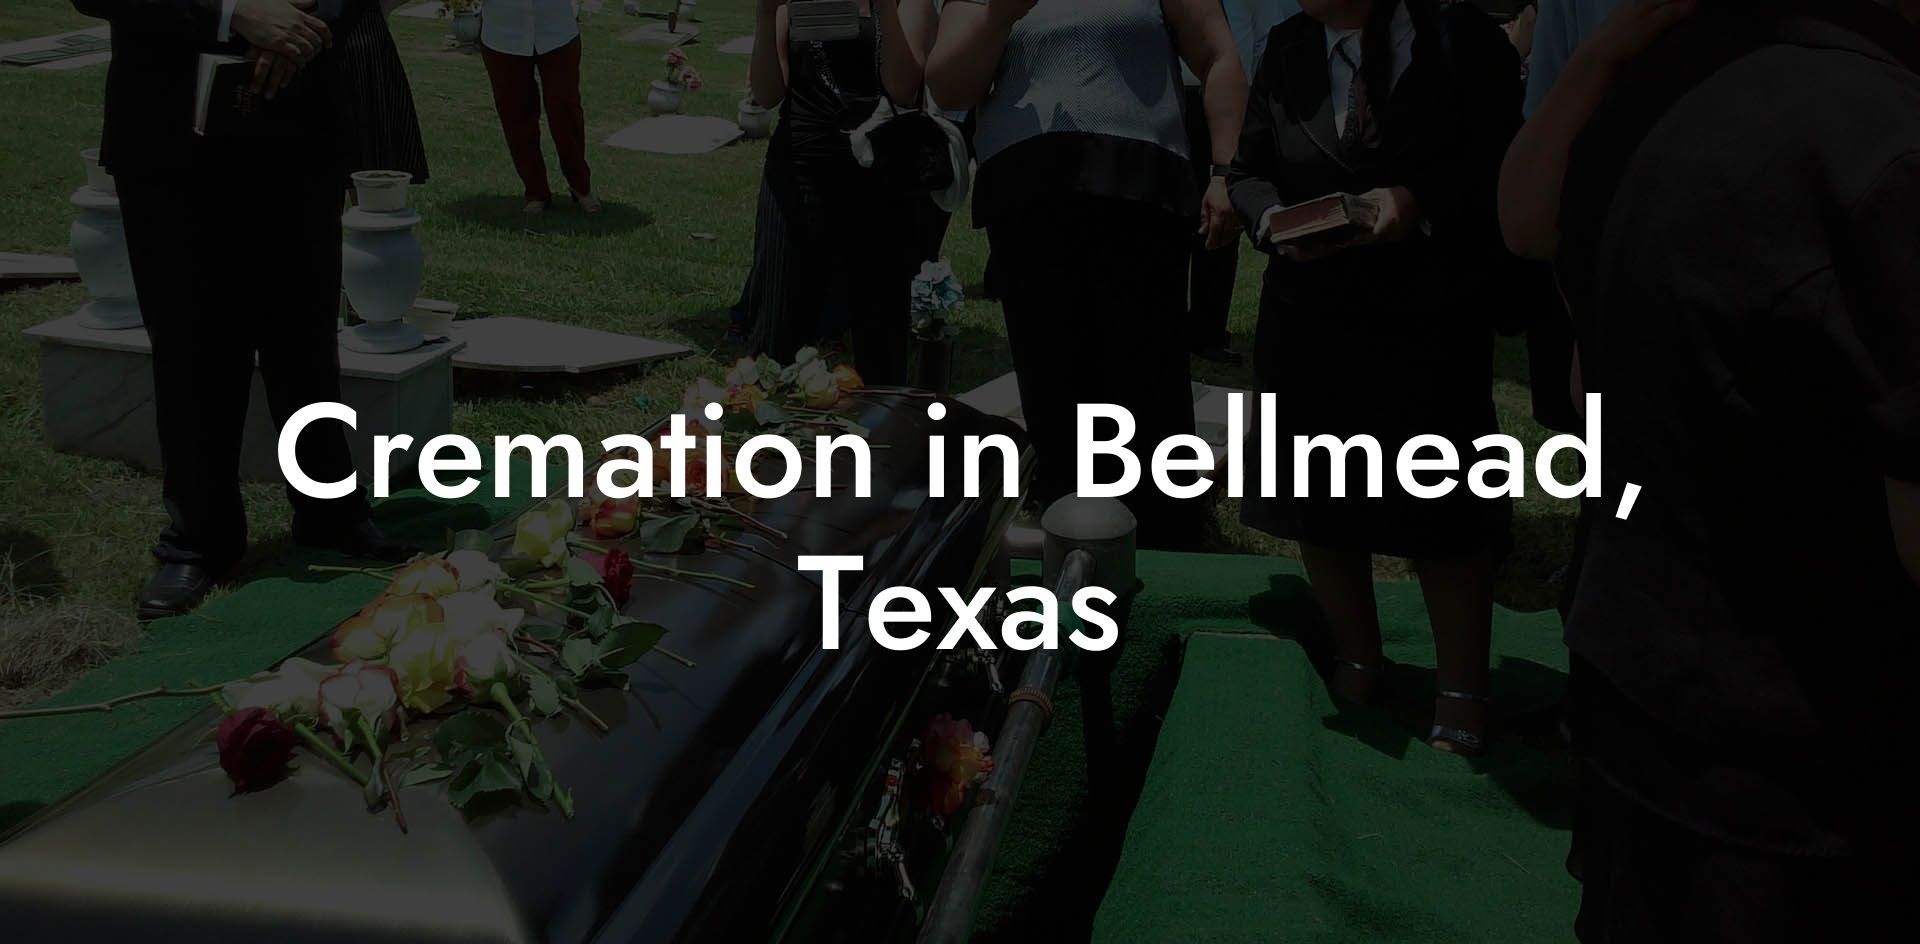 Cremation in Bellmead, Texas